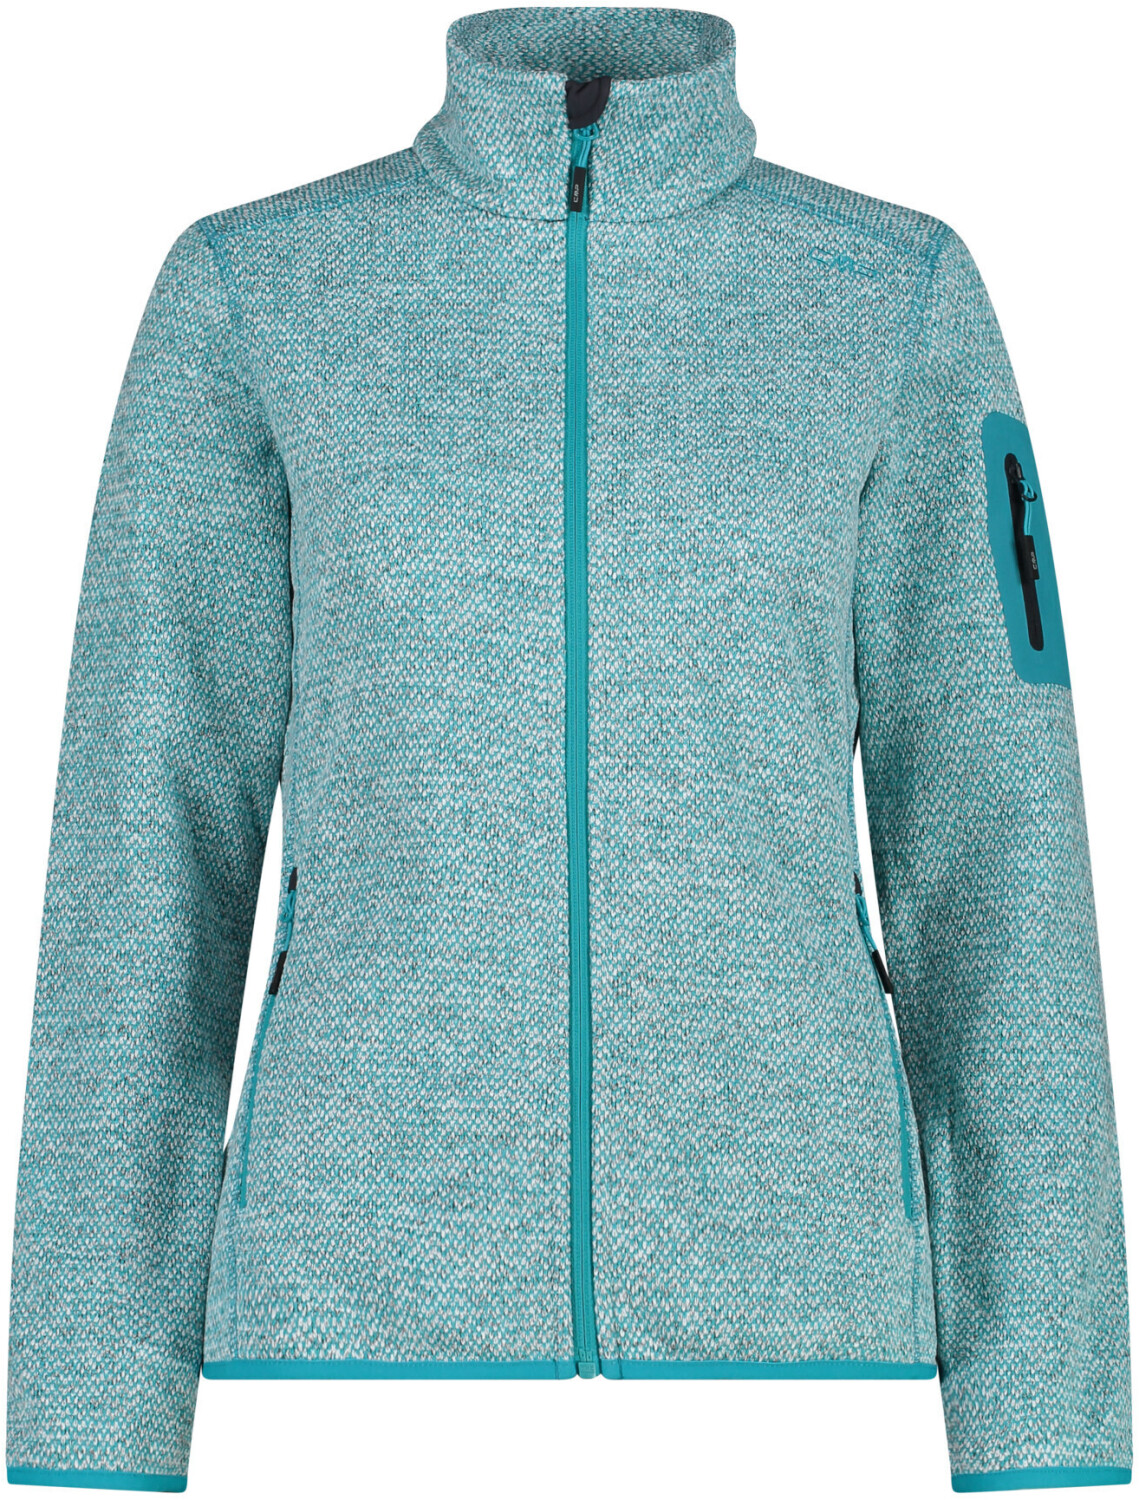 on Buy Deals – (3H14746) CMP Fleece Best Jacket £28.99 from Woman (Today) lagoon/bianco